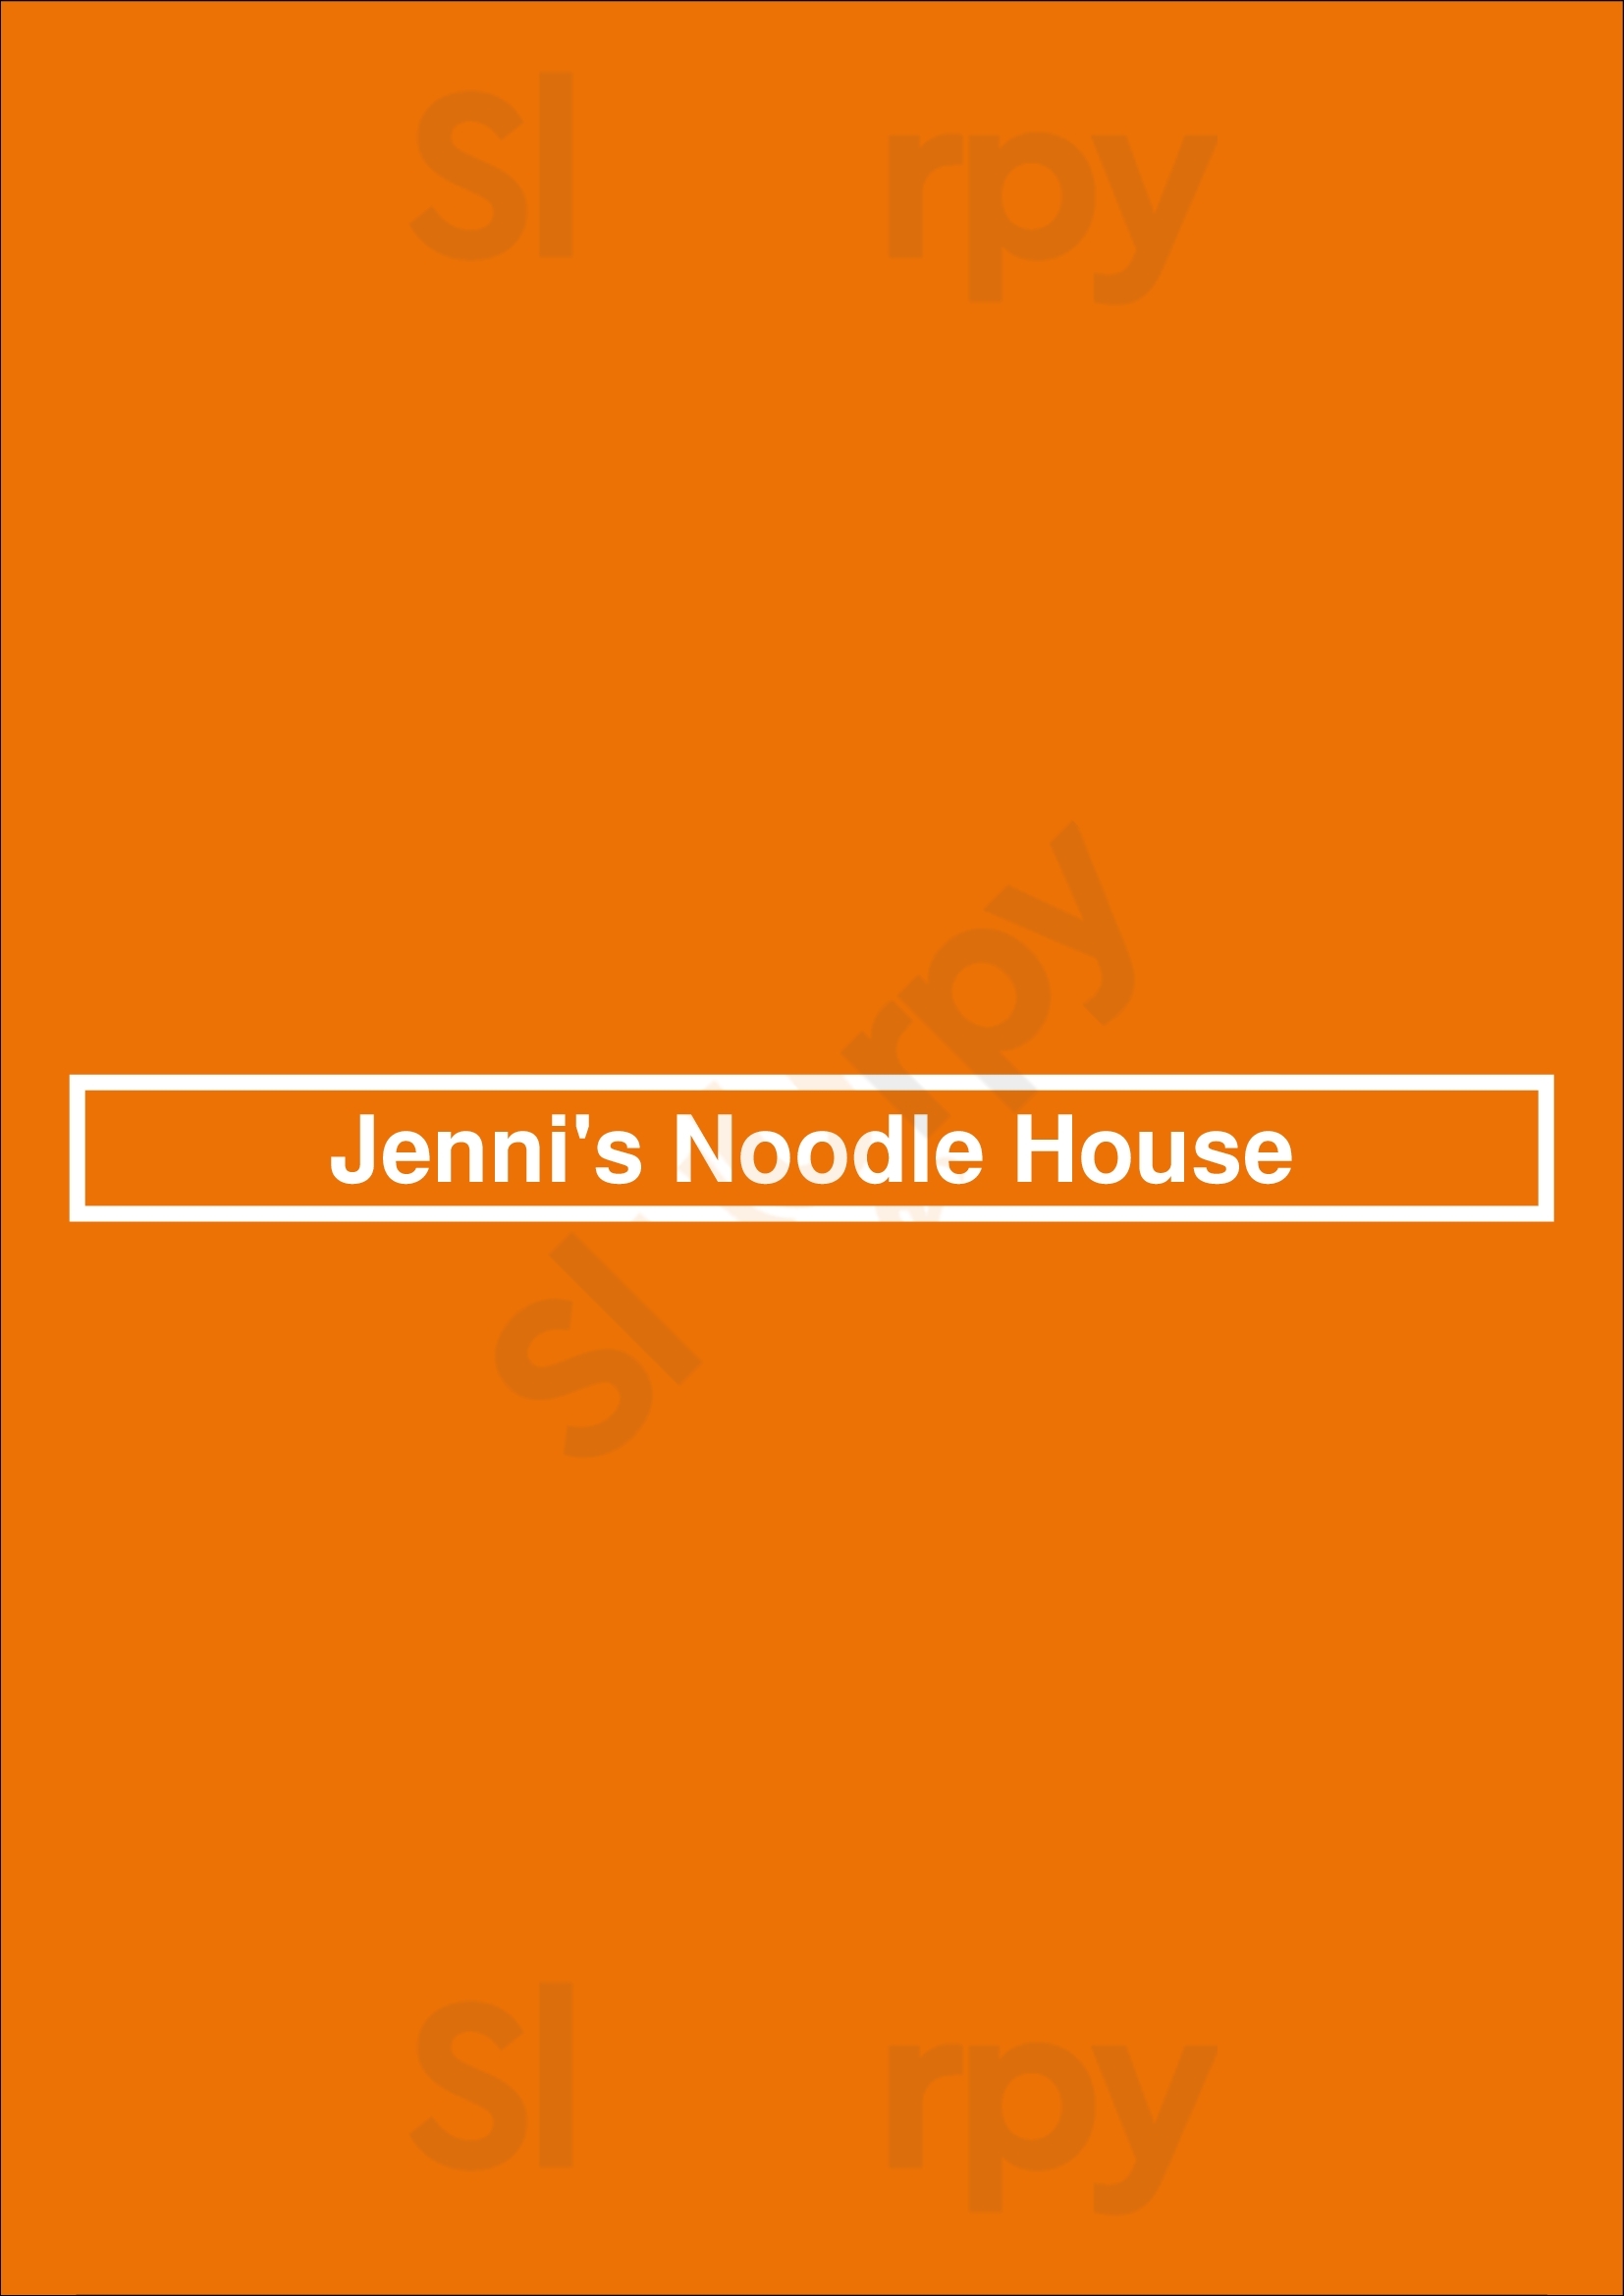 Jenni's Noodle House Houston Menu - 1